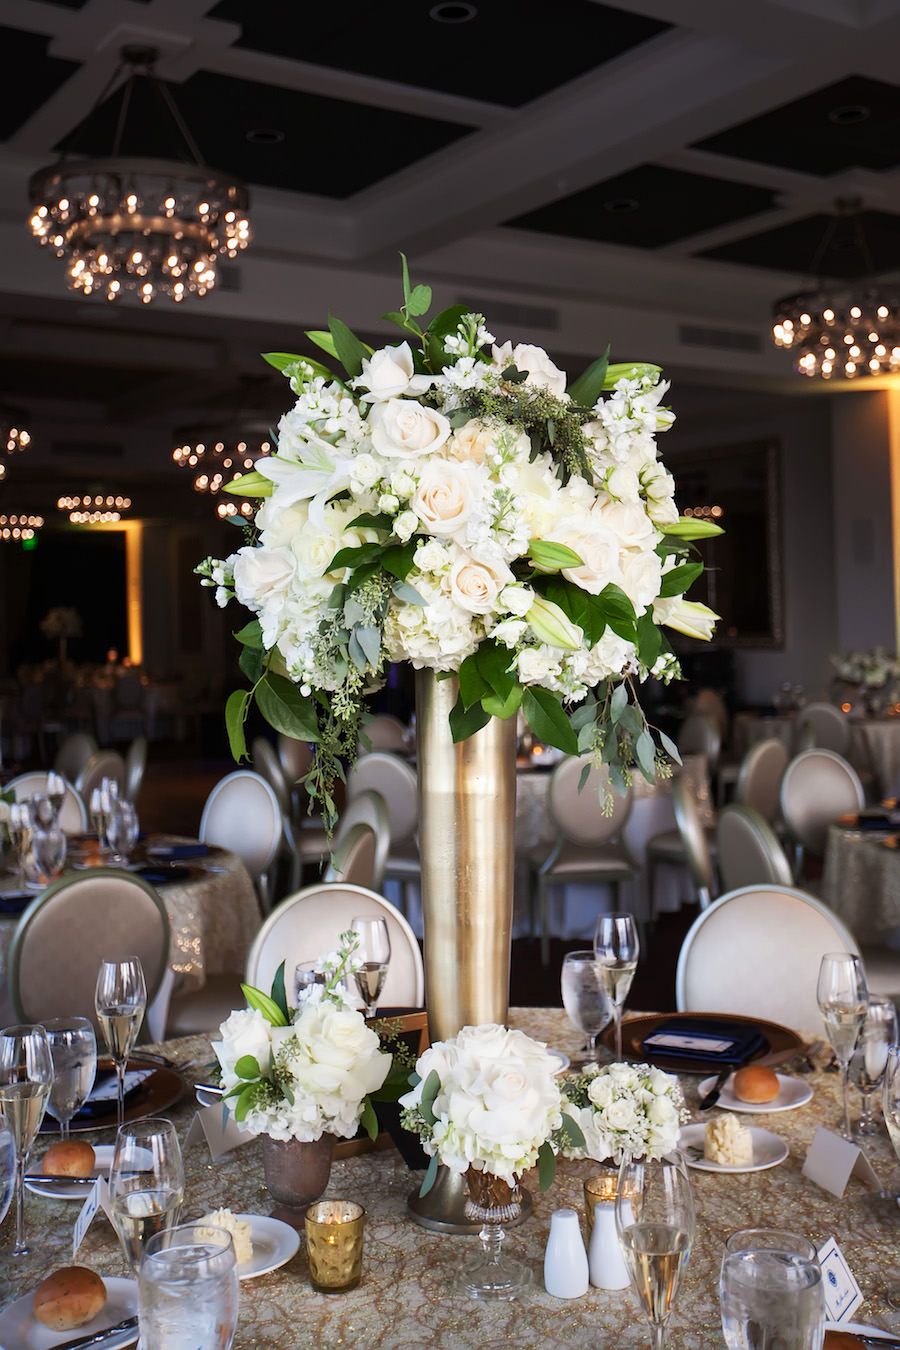 Tall White, Green and Gold Elegant Wedding Reception Centerpiece Flowers Decor | St. Petersburg Wedding Planner Parties a la Carte